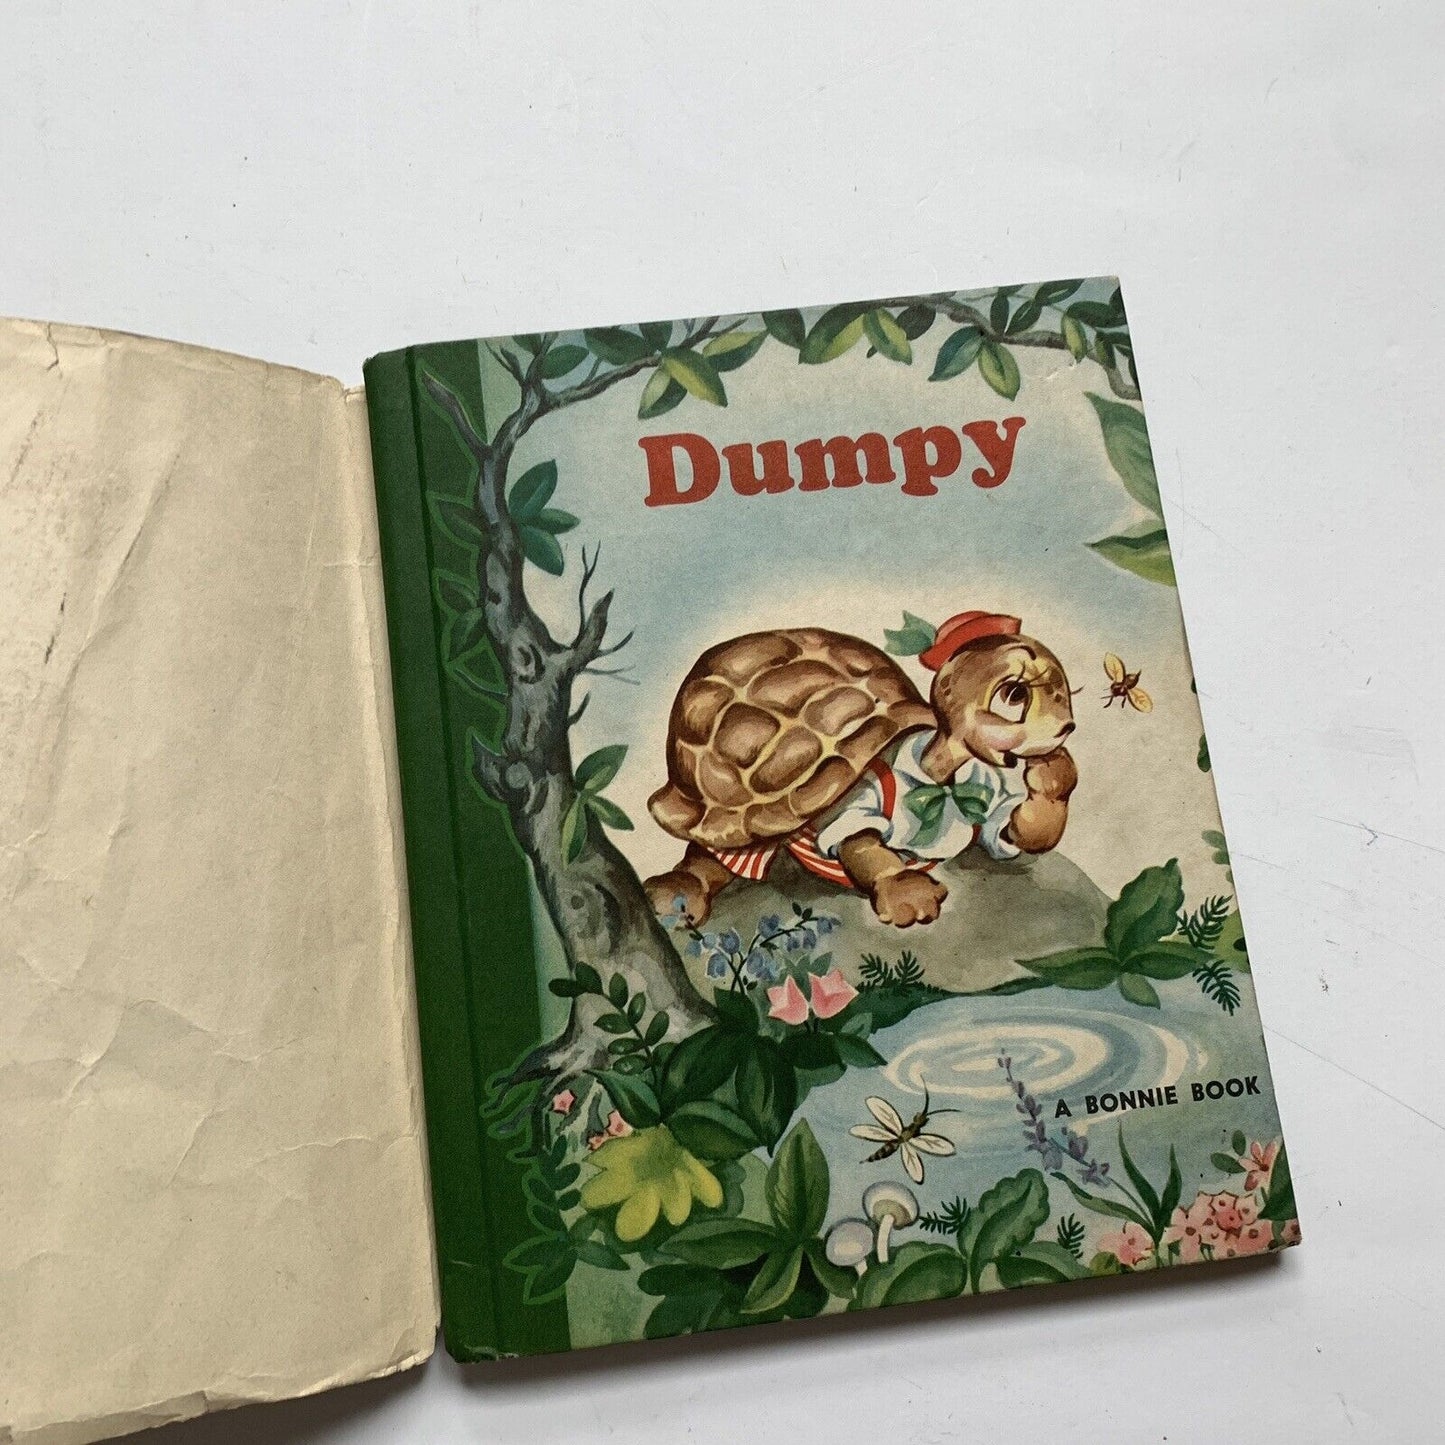 1950 Vintage Dumpy A Bonnie Book Hardcover Children's with DJ